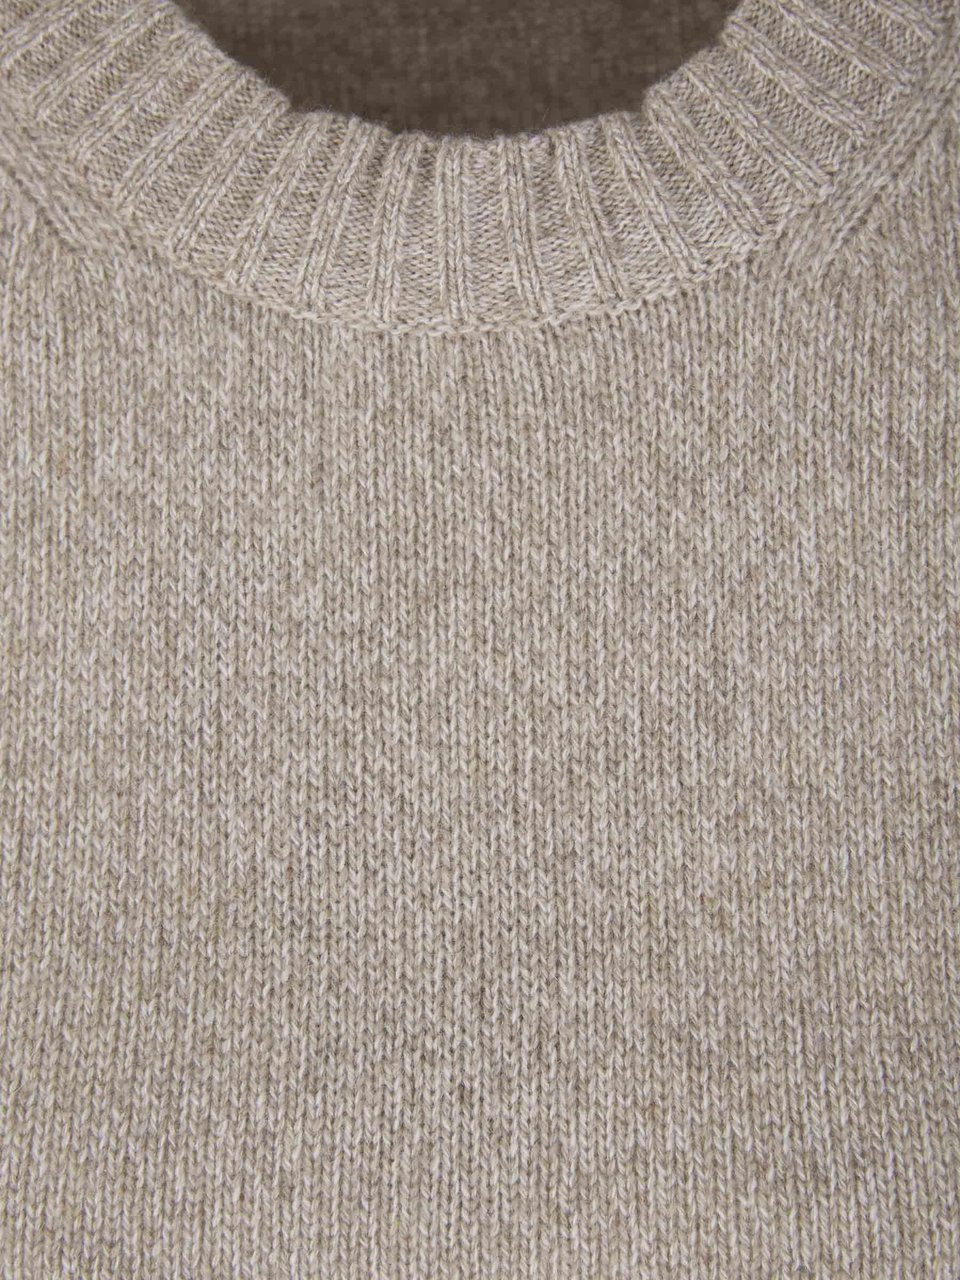 AMI Paris Cashmere Knit Sweater Taupe